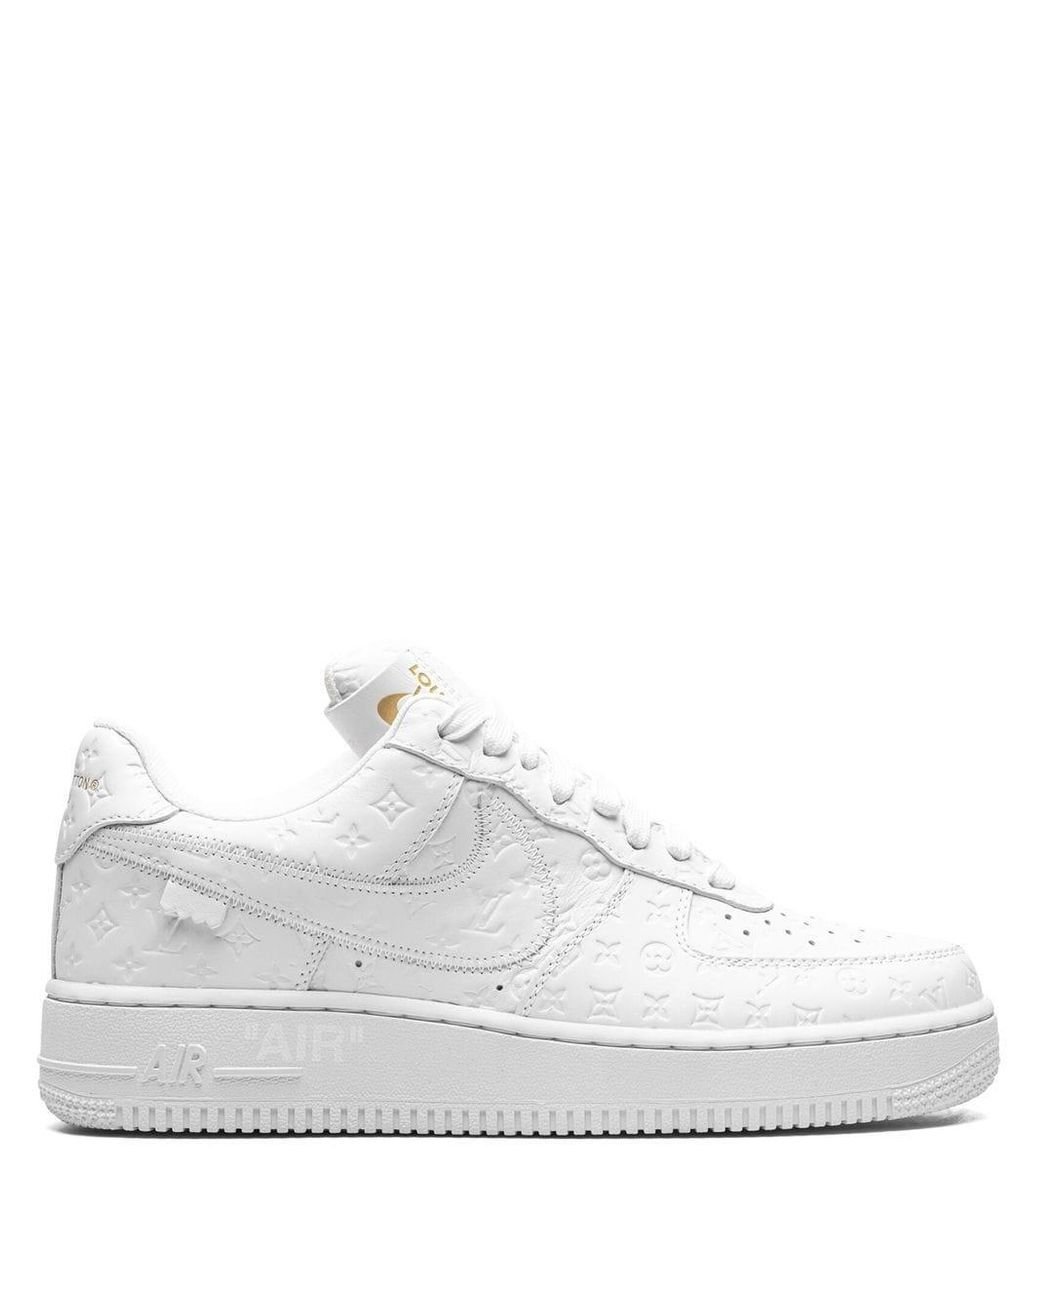 Louis Vuitton x Nike Air Force 1 White | Size 8, Sneaker